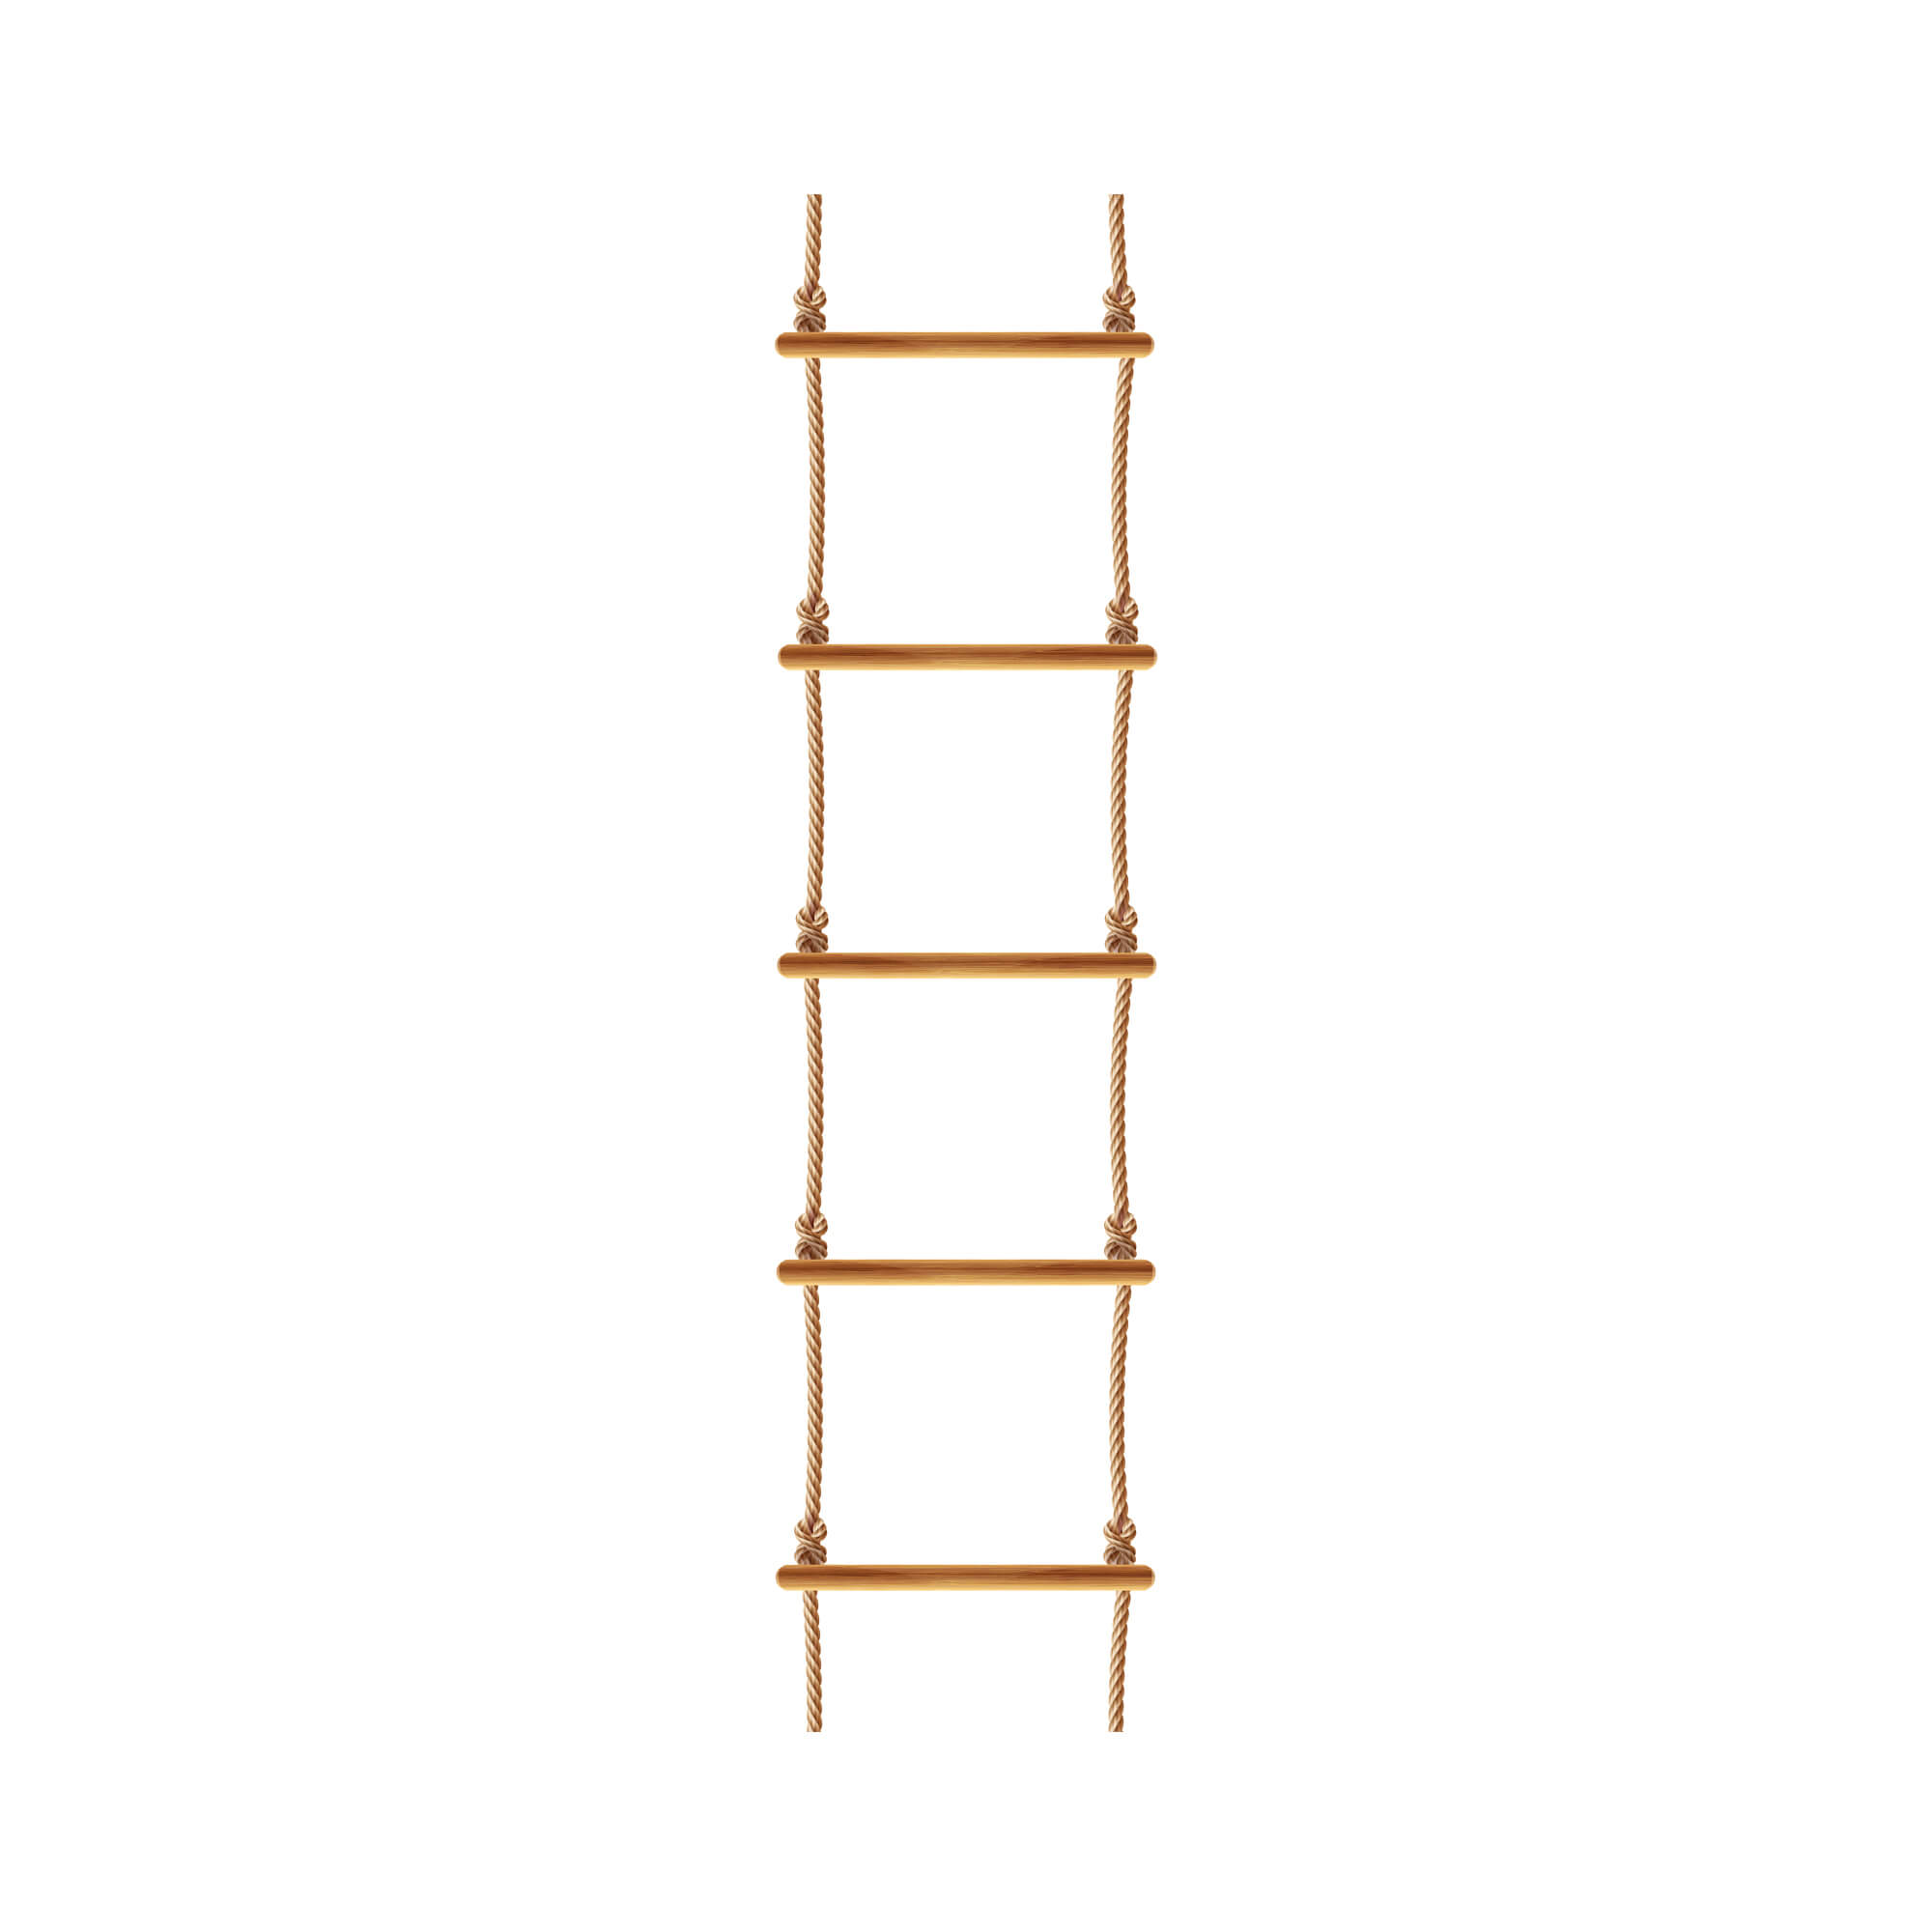 Rope Ladder